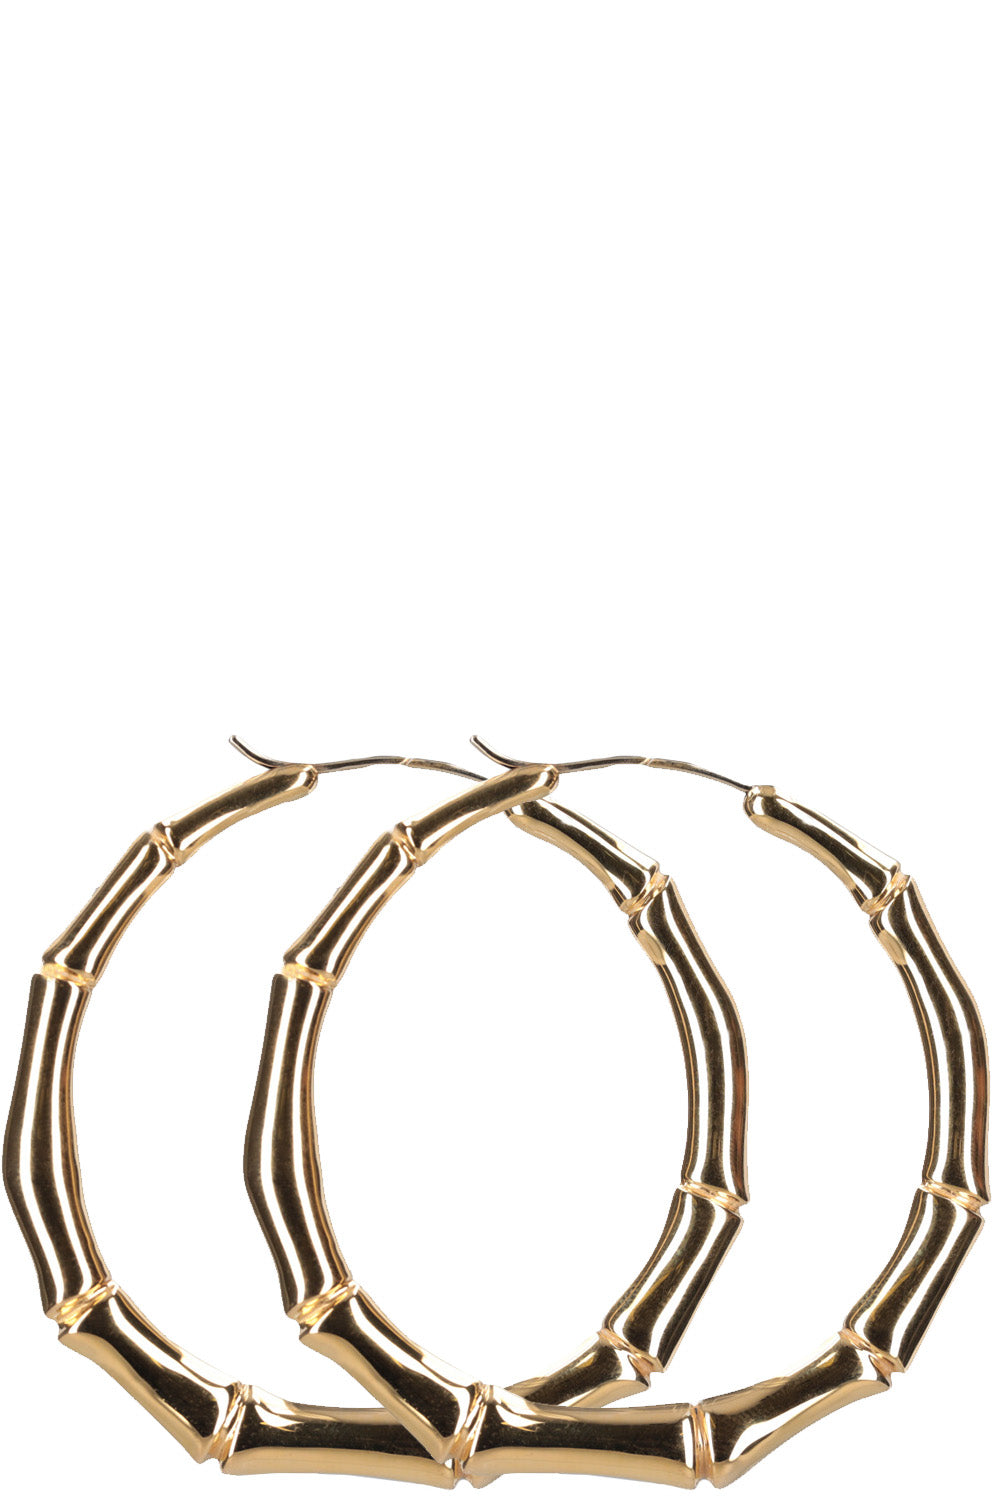 GUCCI Bamboo Earrings 18K Gold